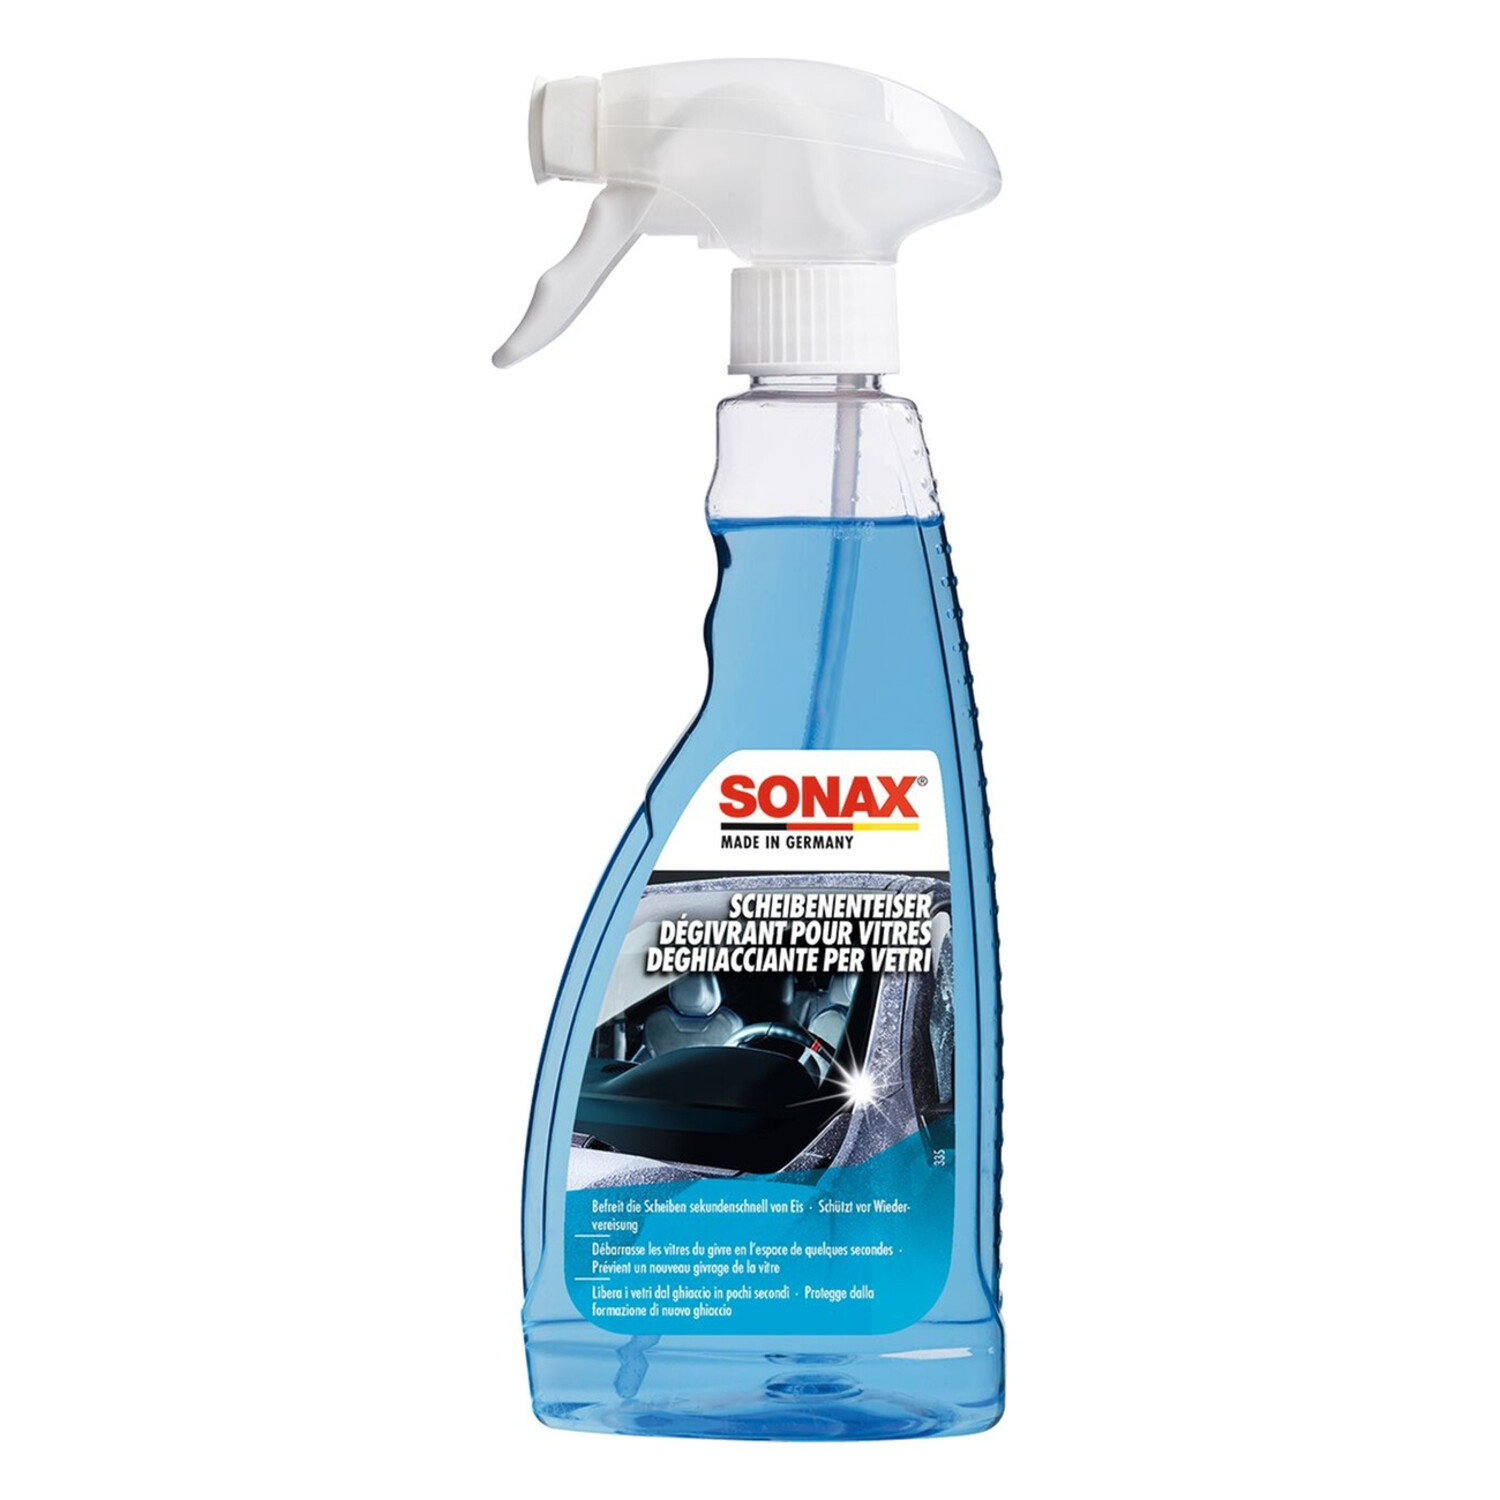 SONAX Antibeschlag Spray 500ml